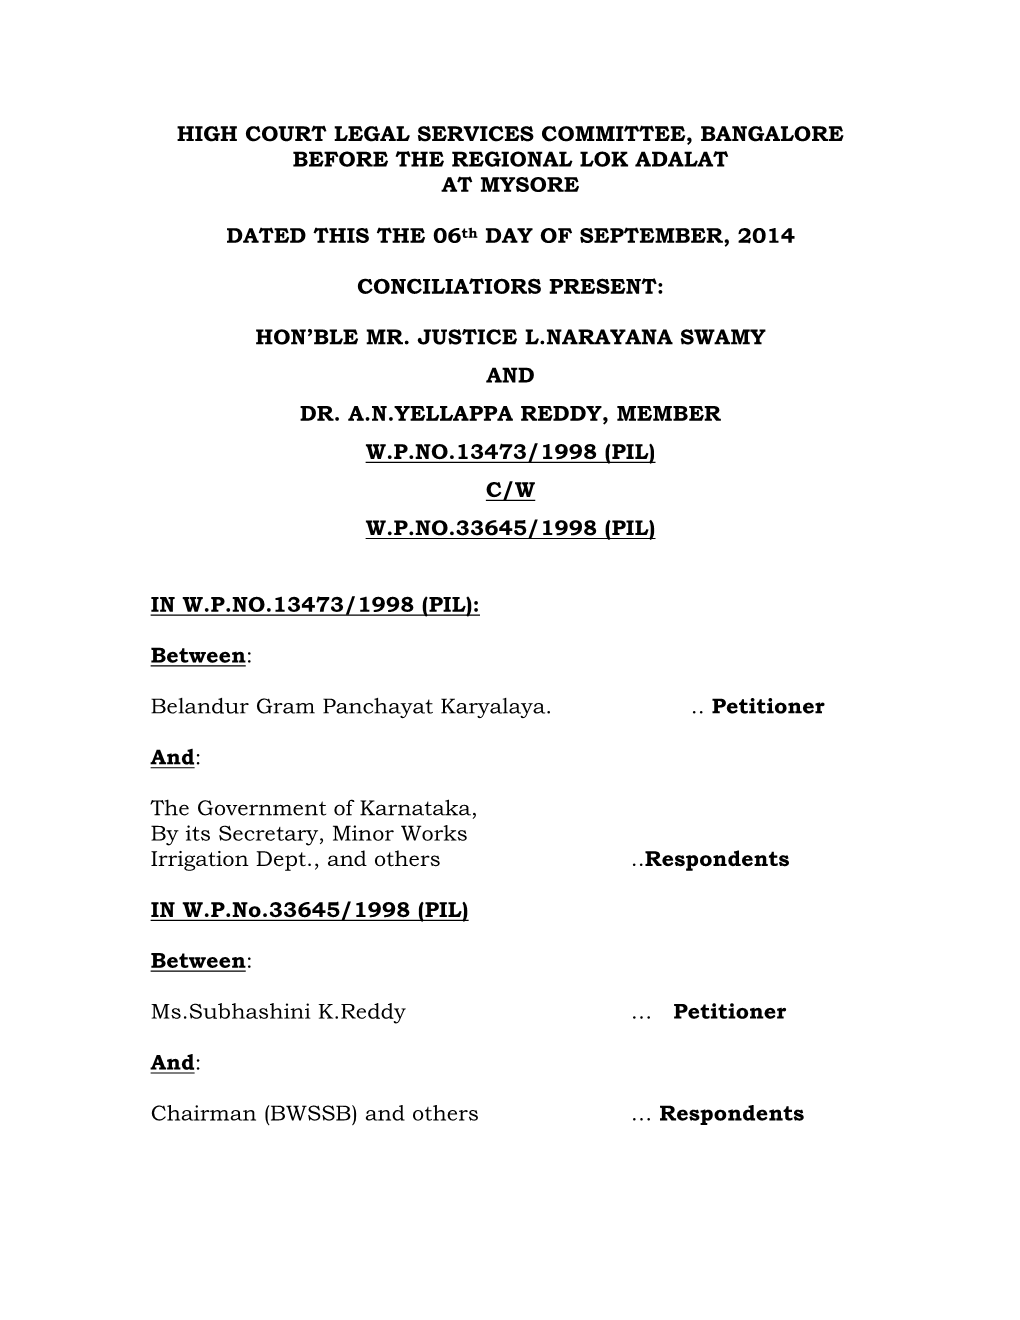 Regional Lok Adalat Proceedings Dated 06-09-2014